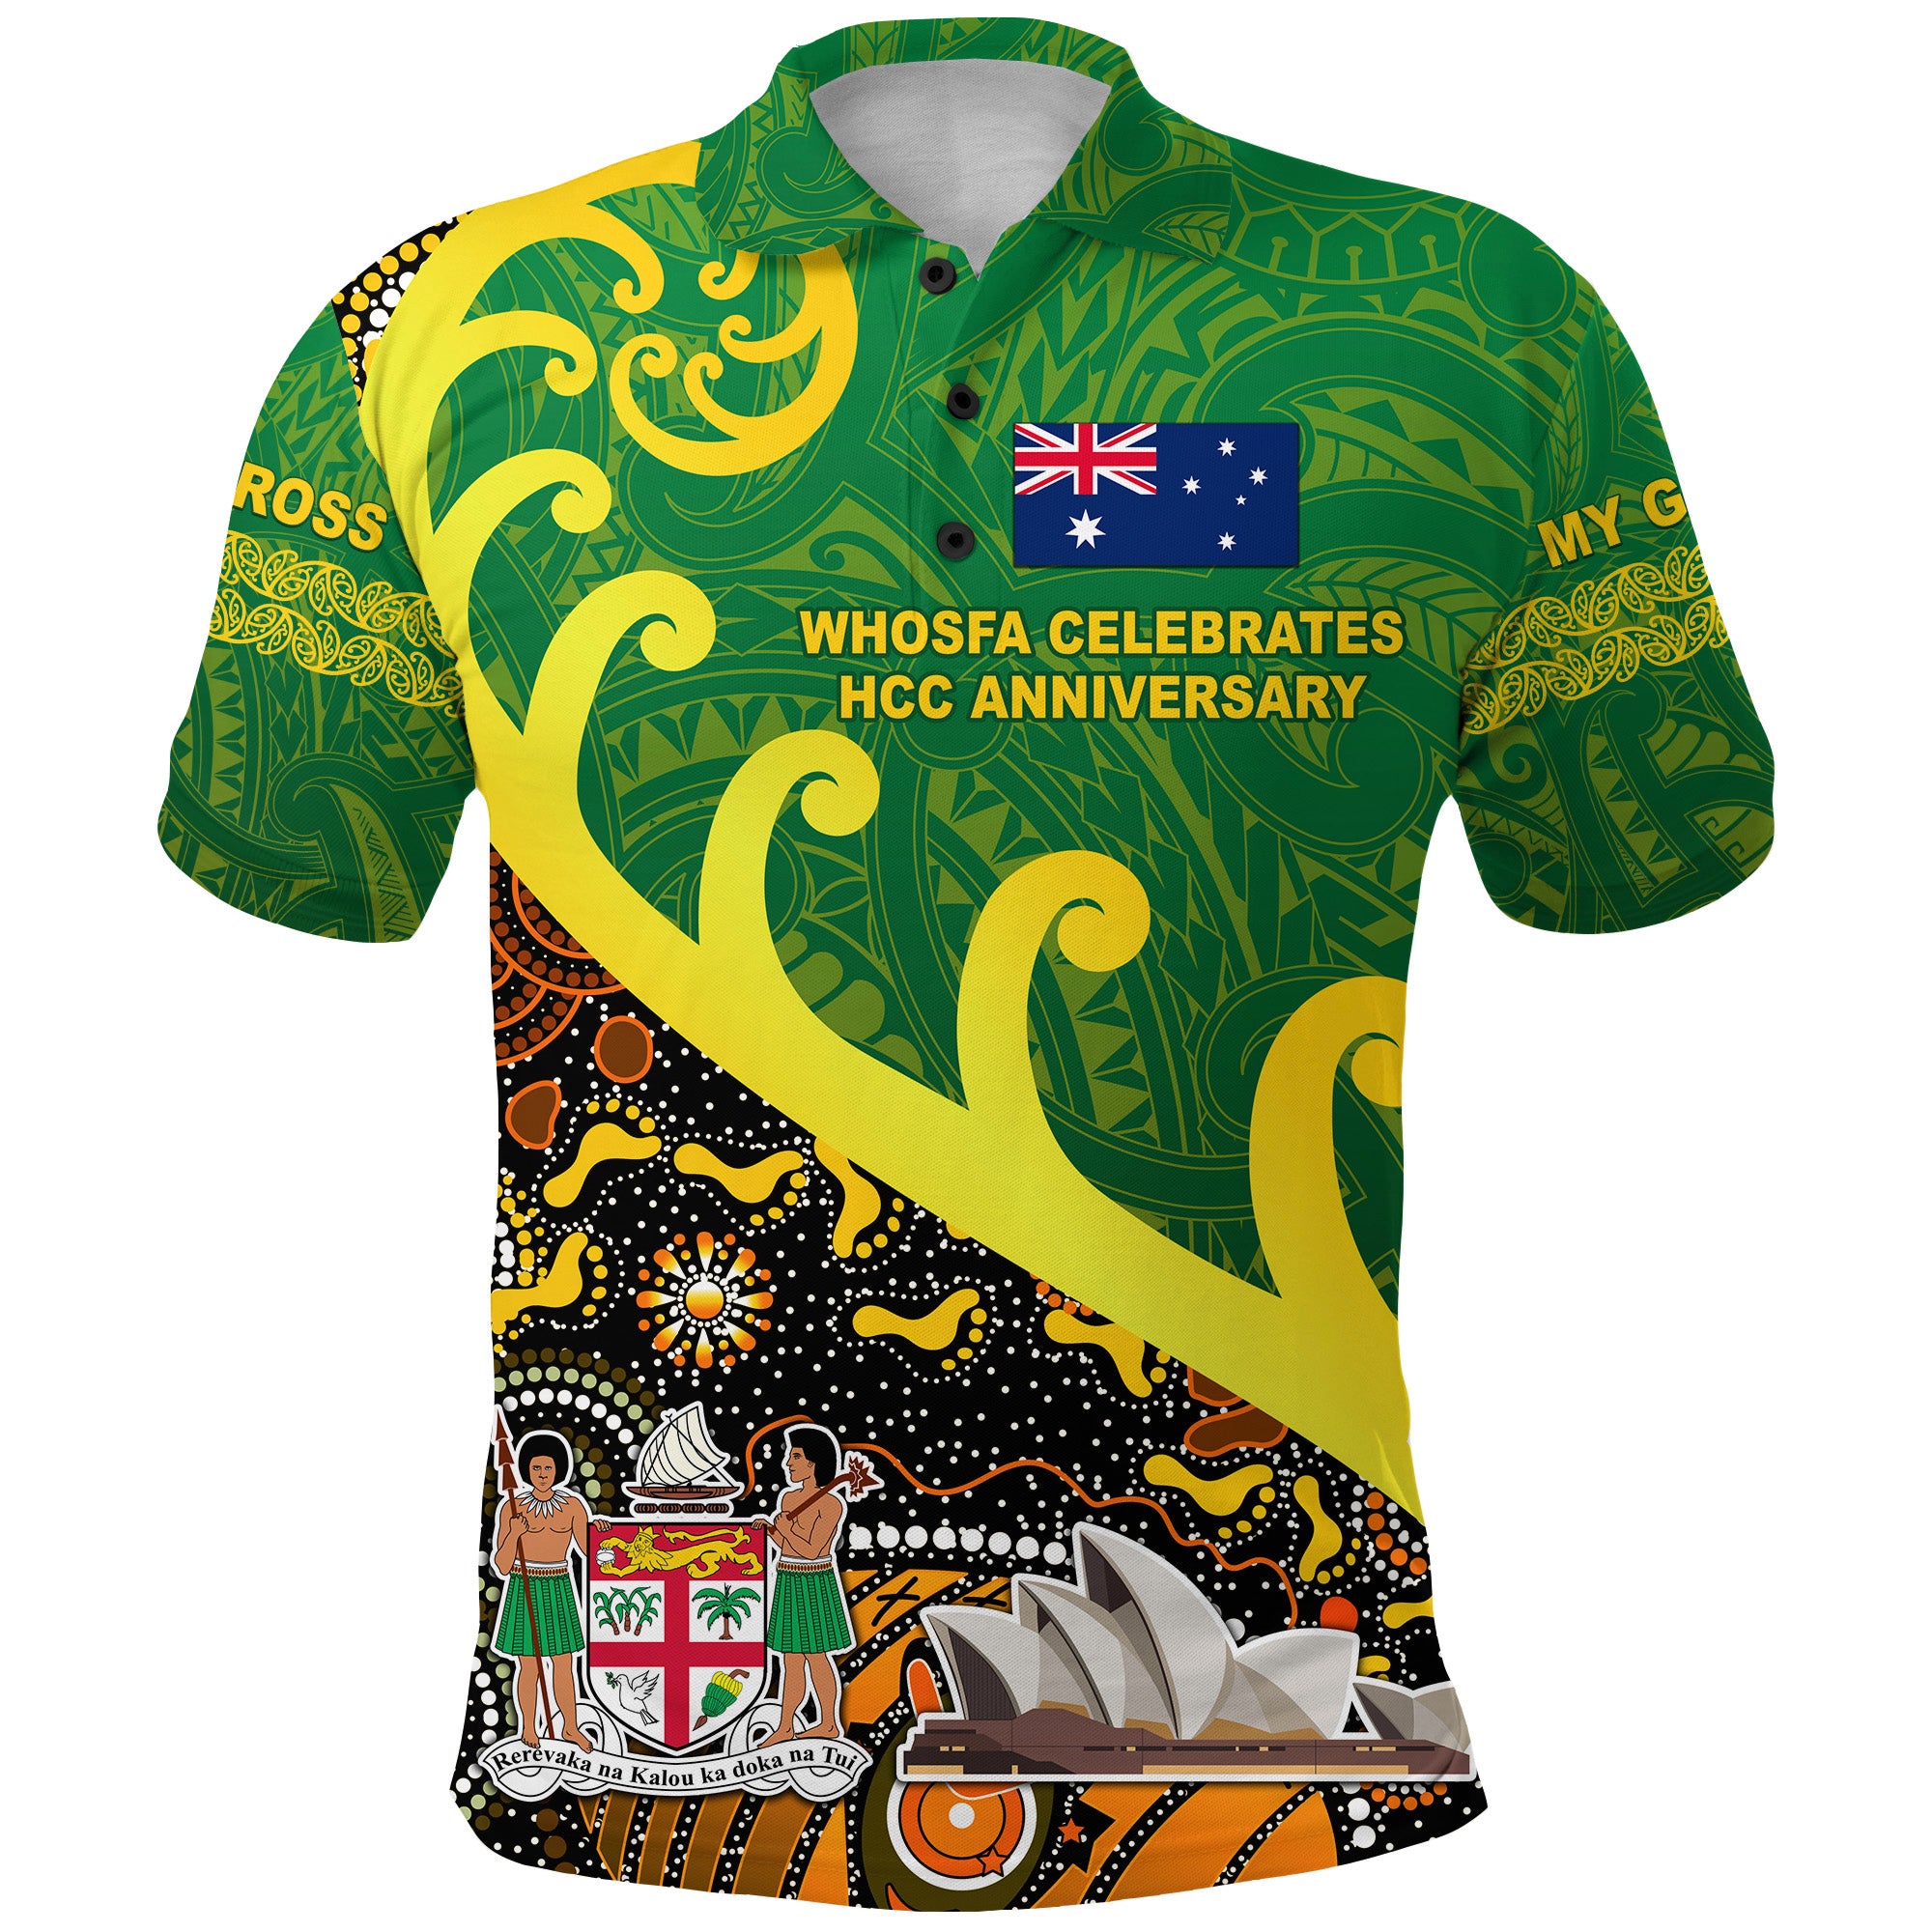 Whosfa Celebrates HCC Anniversary Fiji Australia Aboriginal Polo Shirt Silver Fern Koru Vibes Green LT8 Green - Polynesian Pride